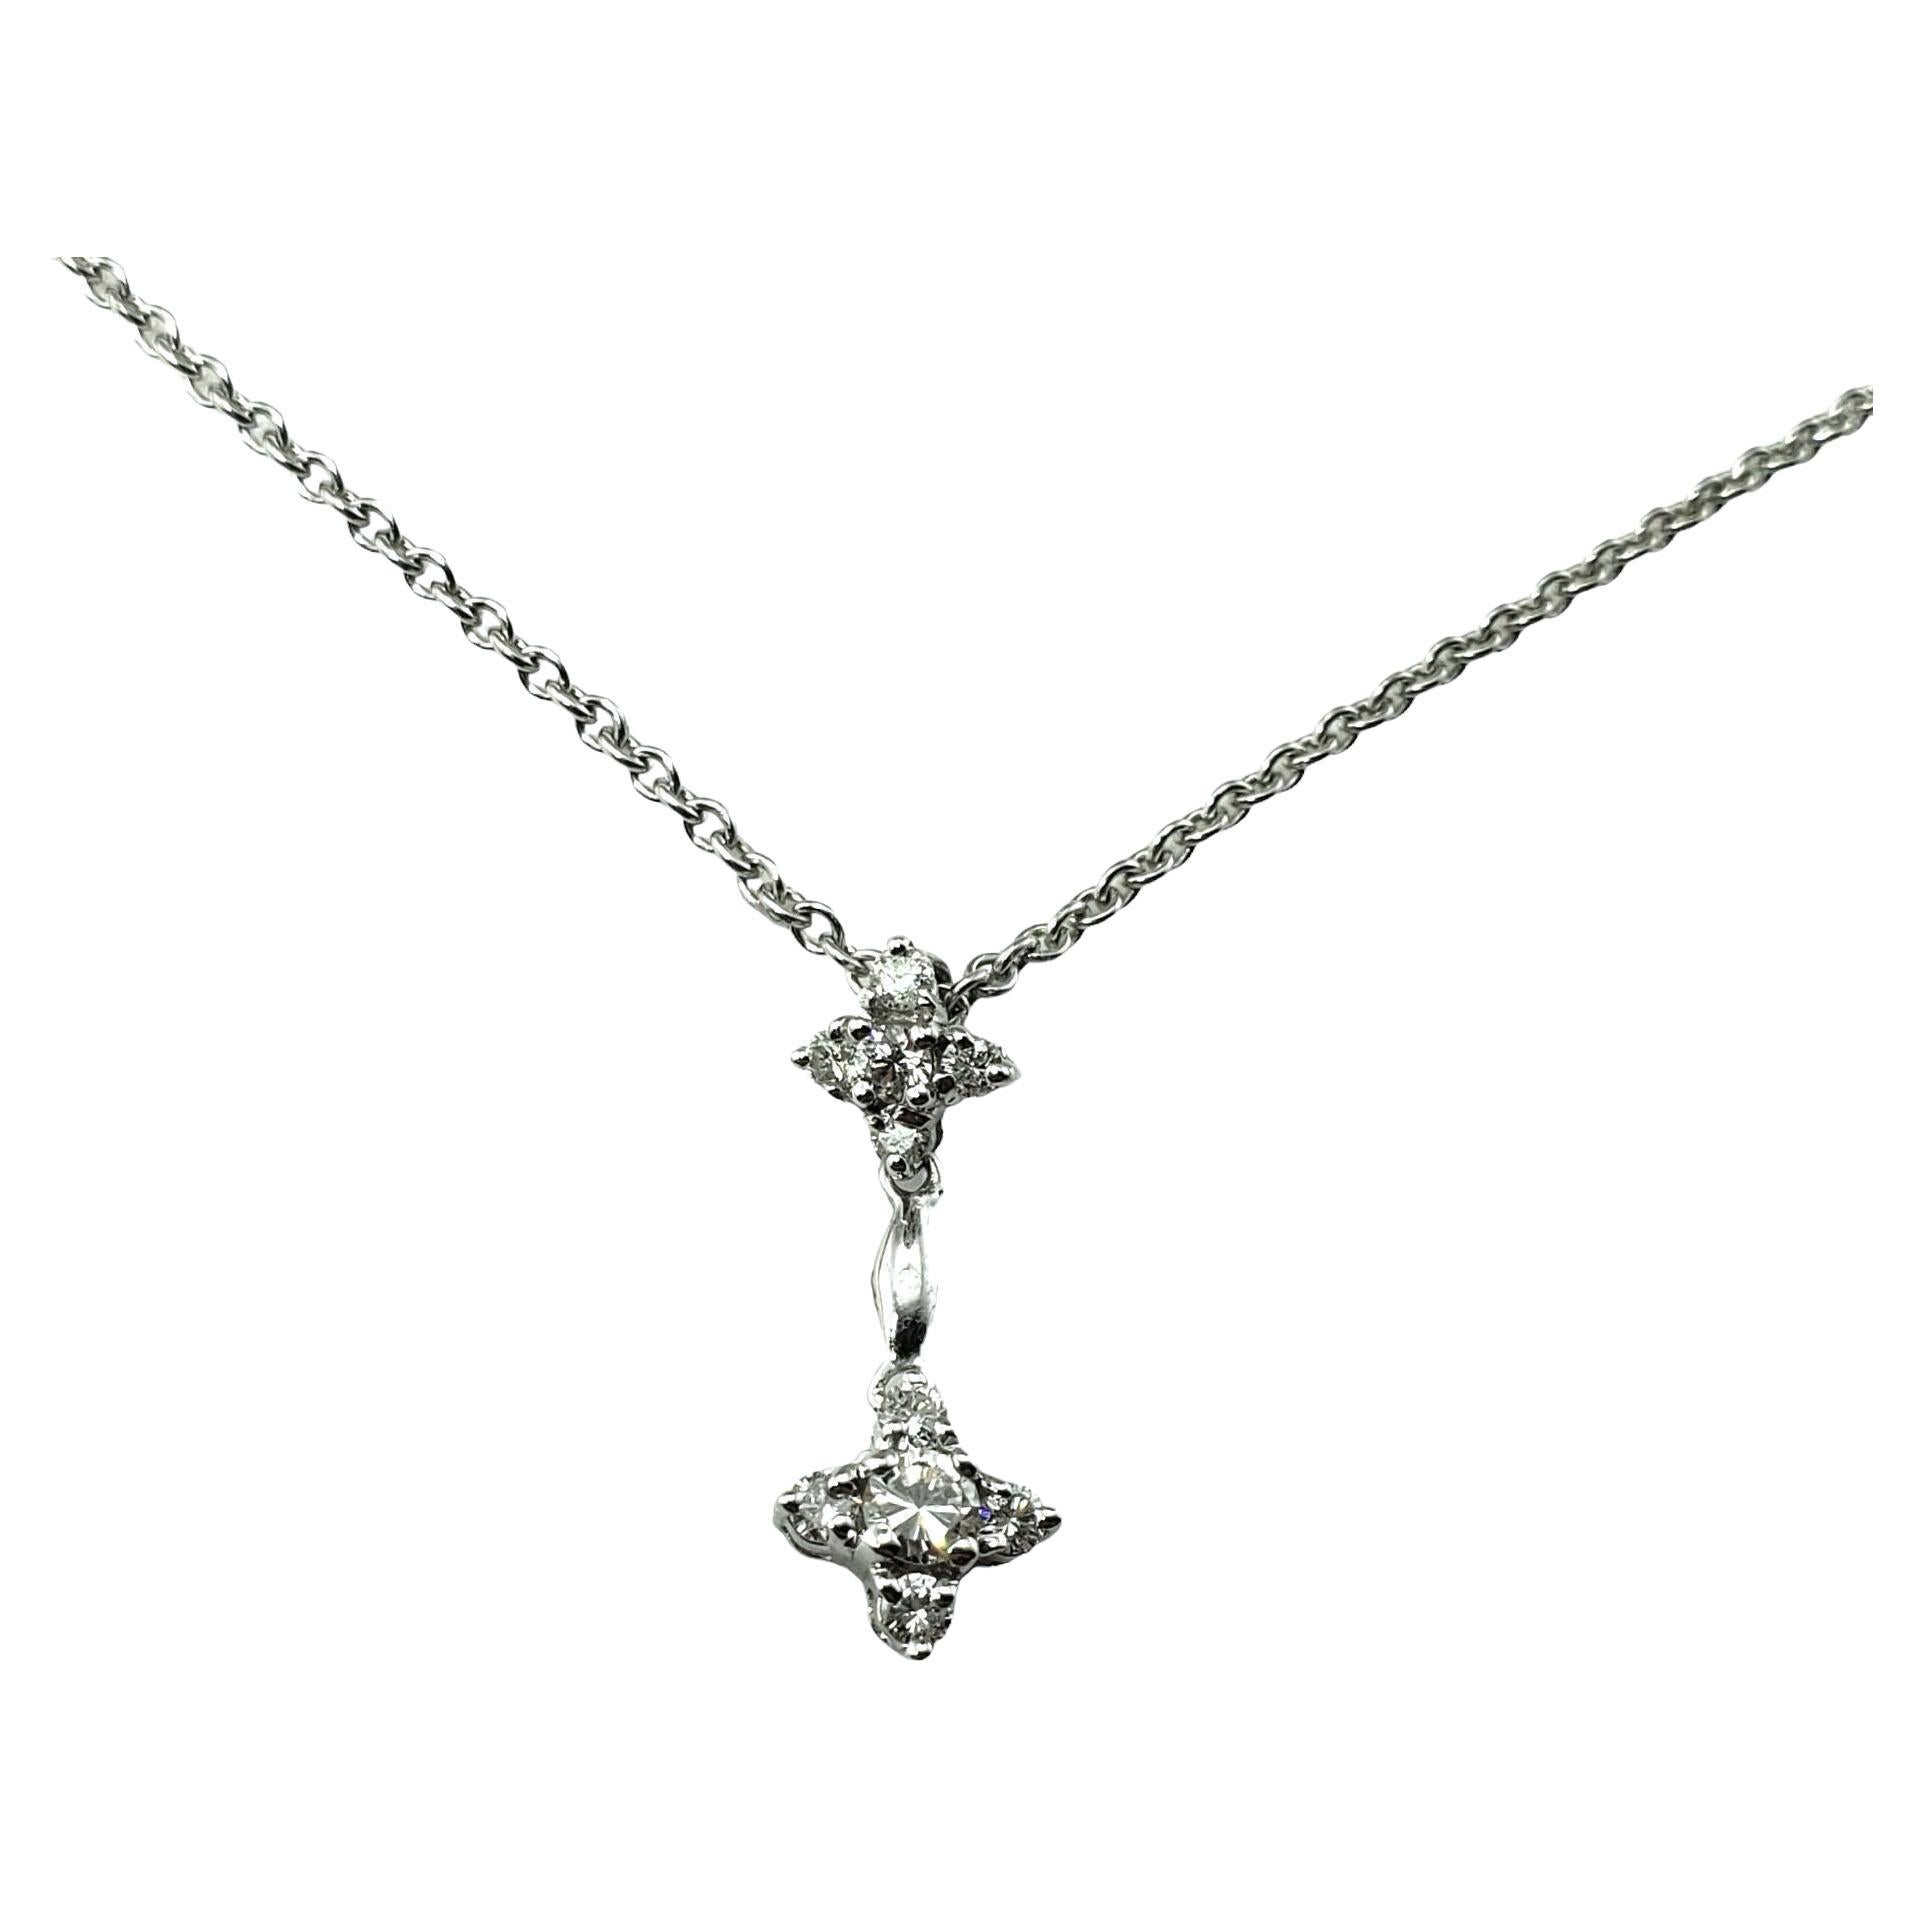  14 Karat White Gold Diamond Pendant Necklace #15501 For Sale